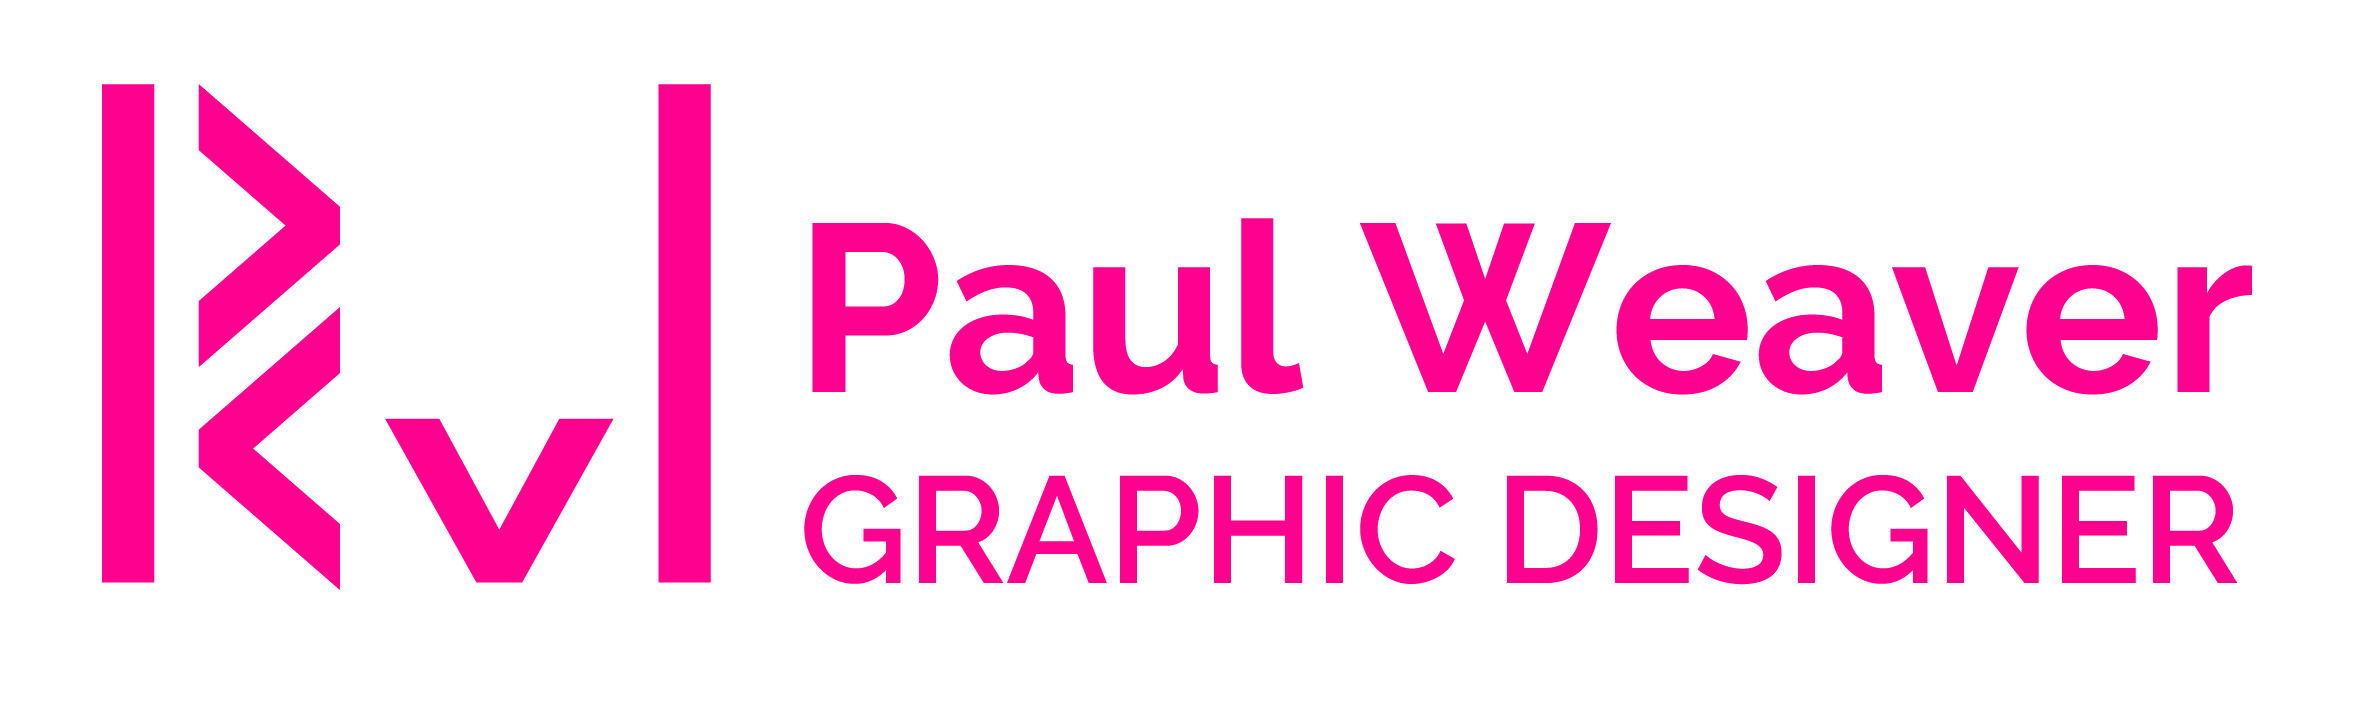 Paul Weaver